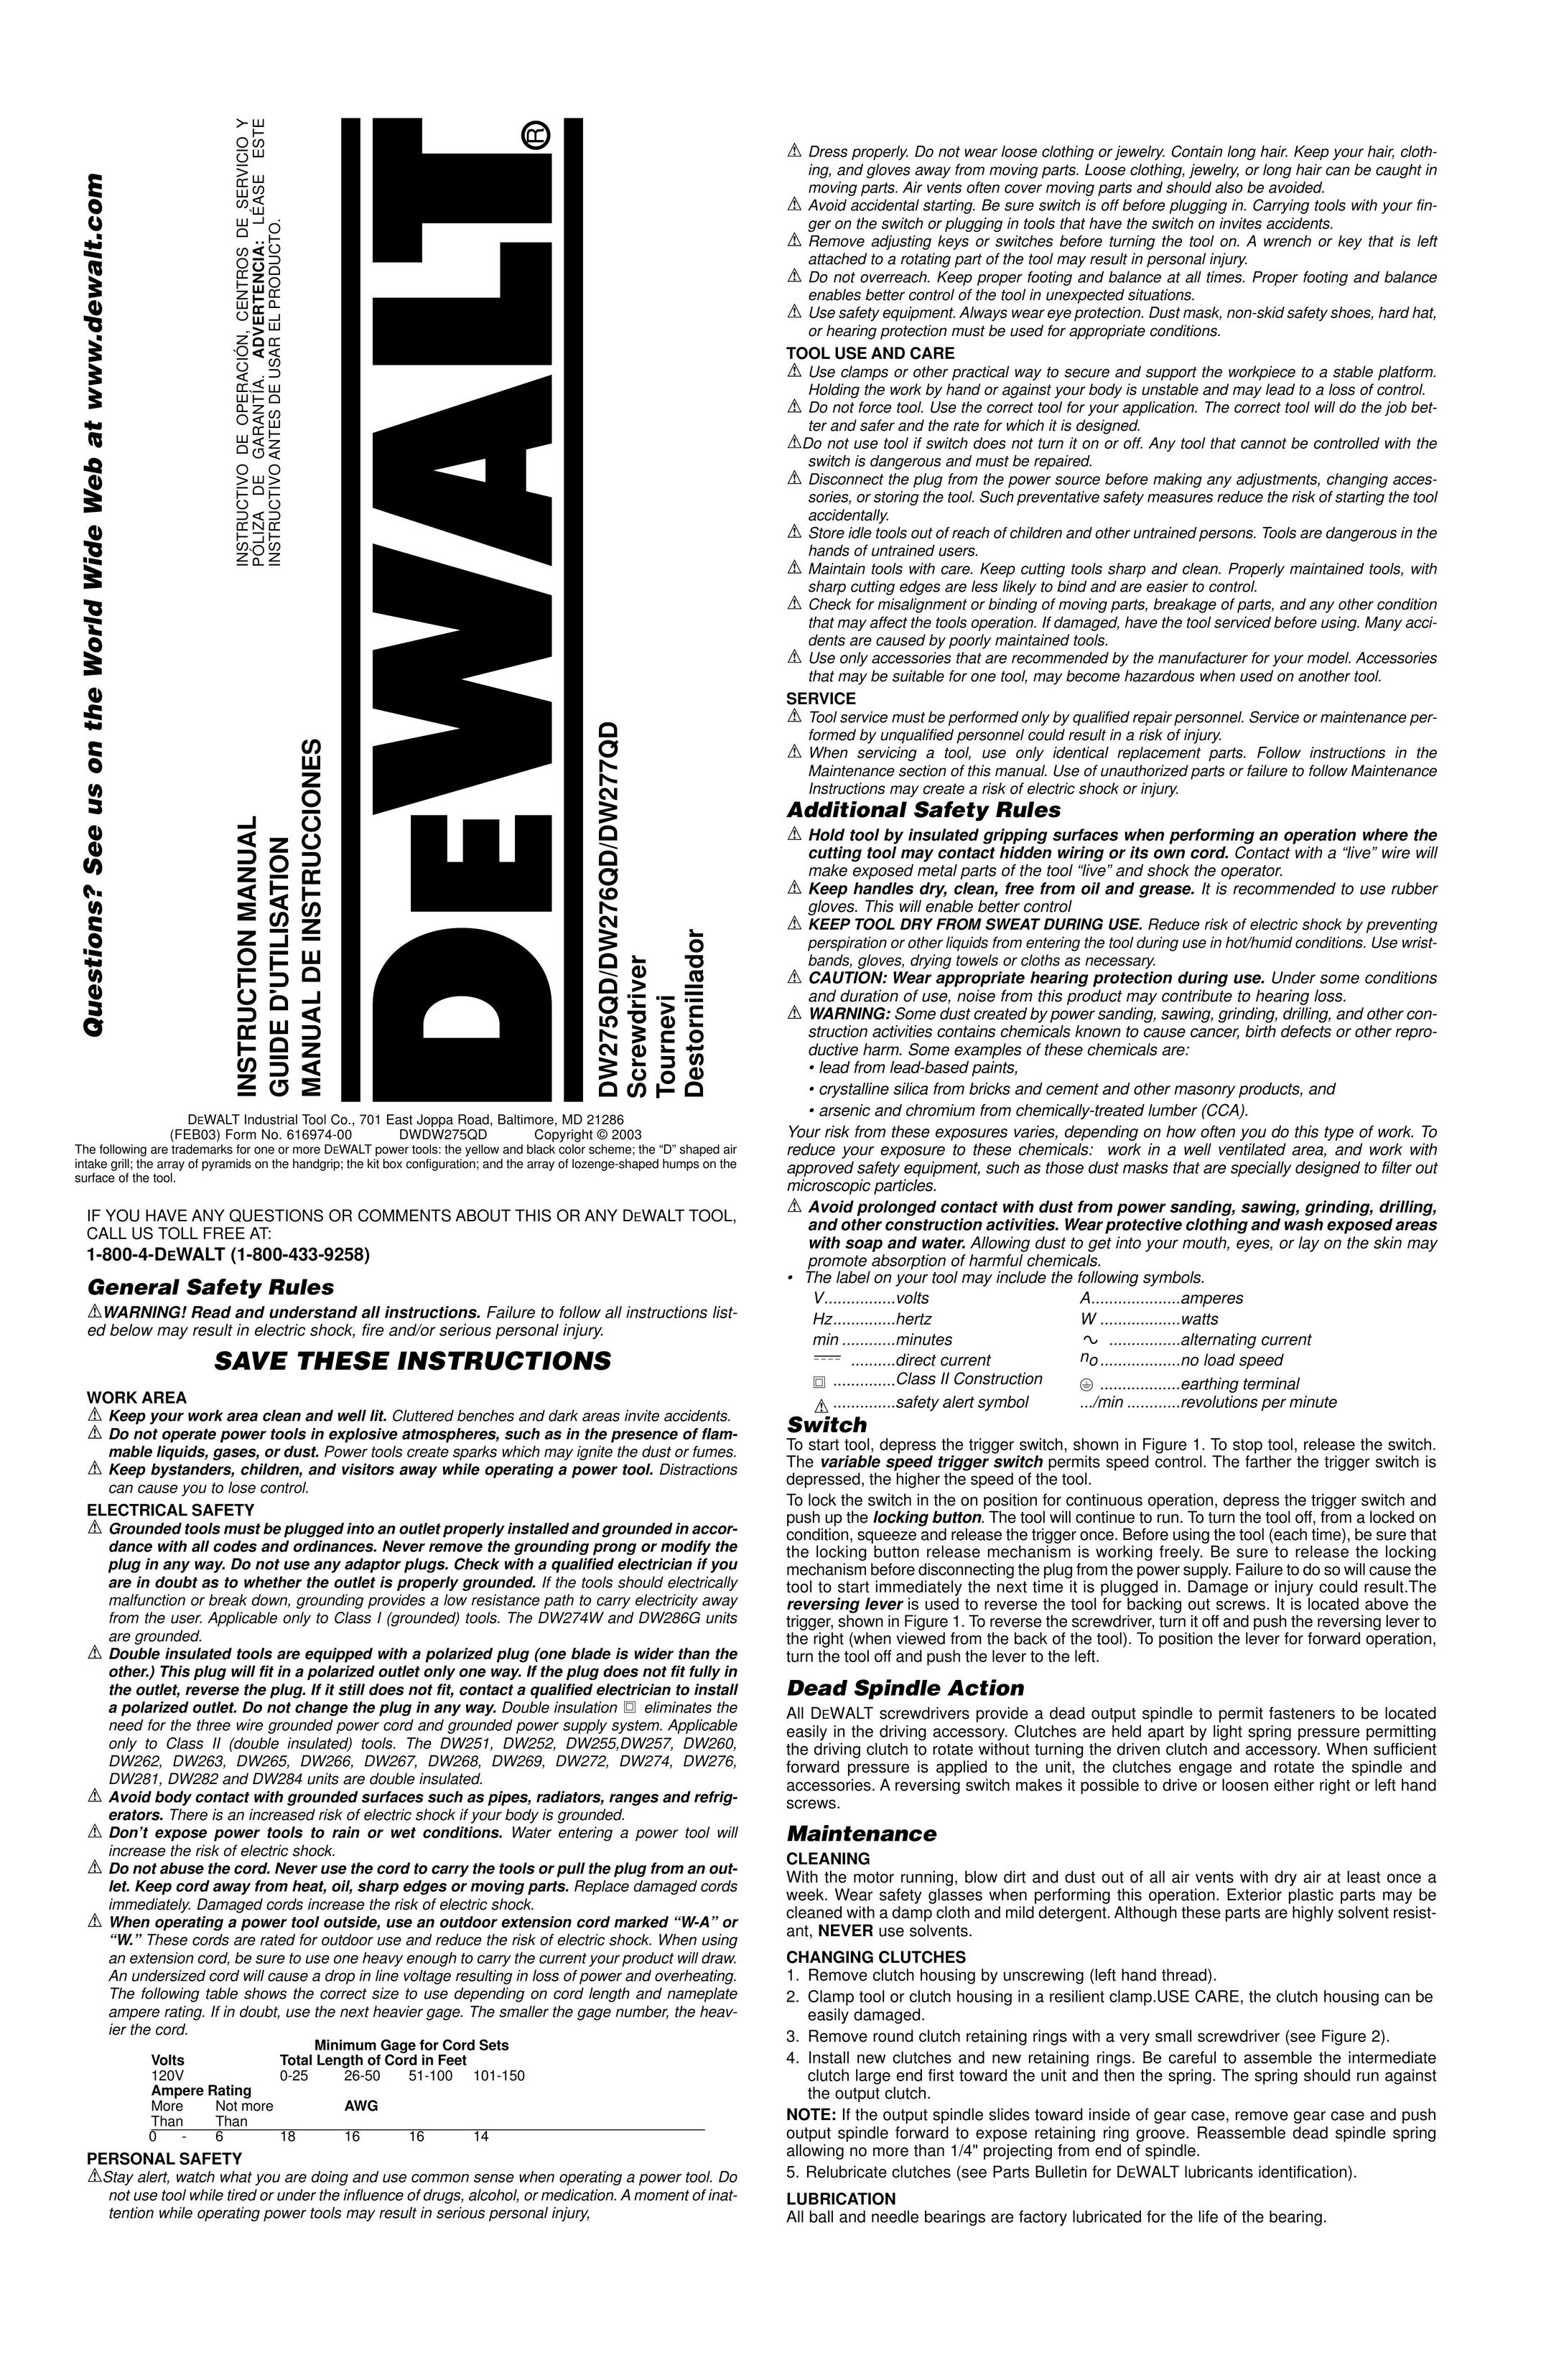 DeWalt DW277QD Power Screwdriver User Manual